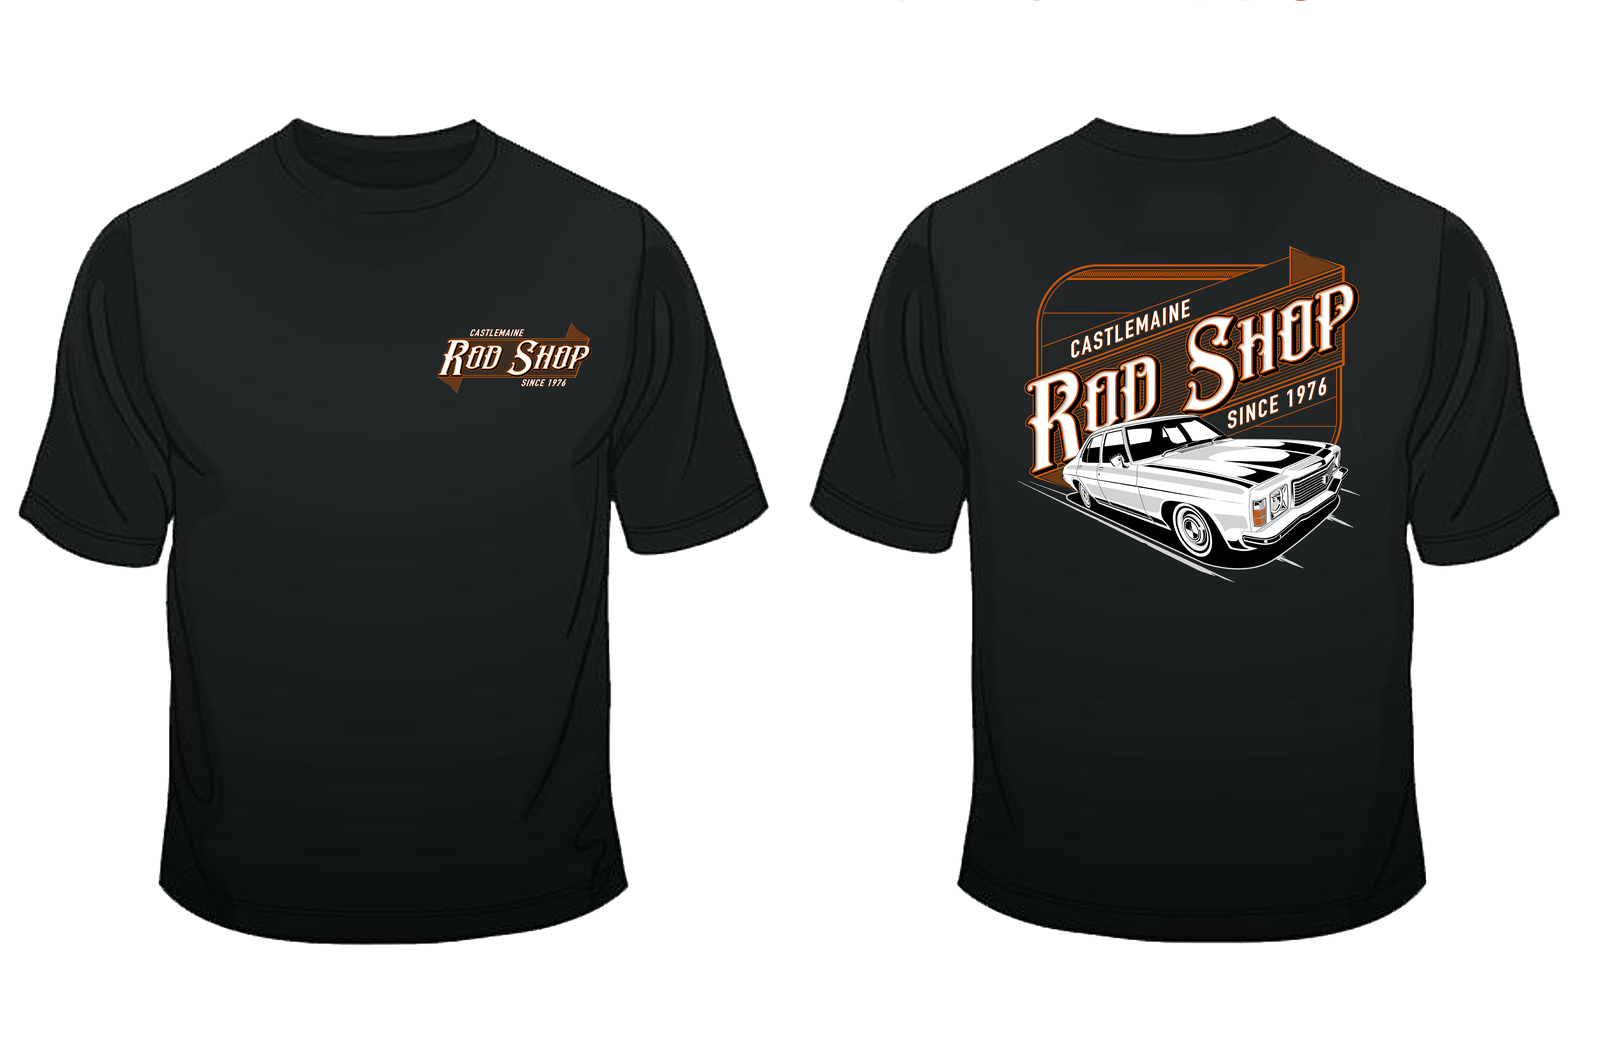 Castlemaine Rod Shop T-Shirt - HJ Holden